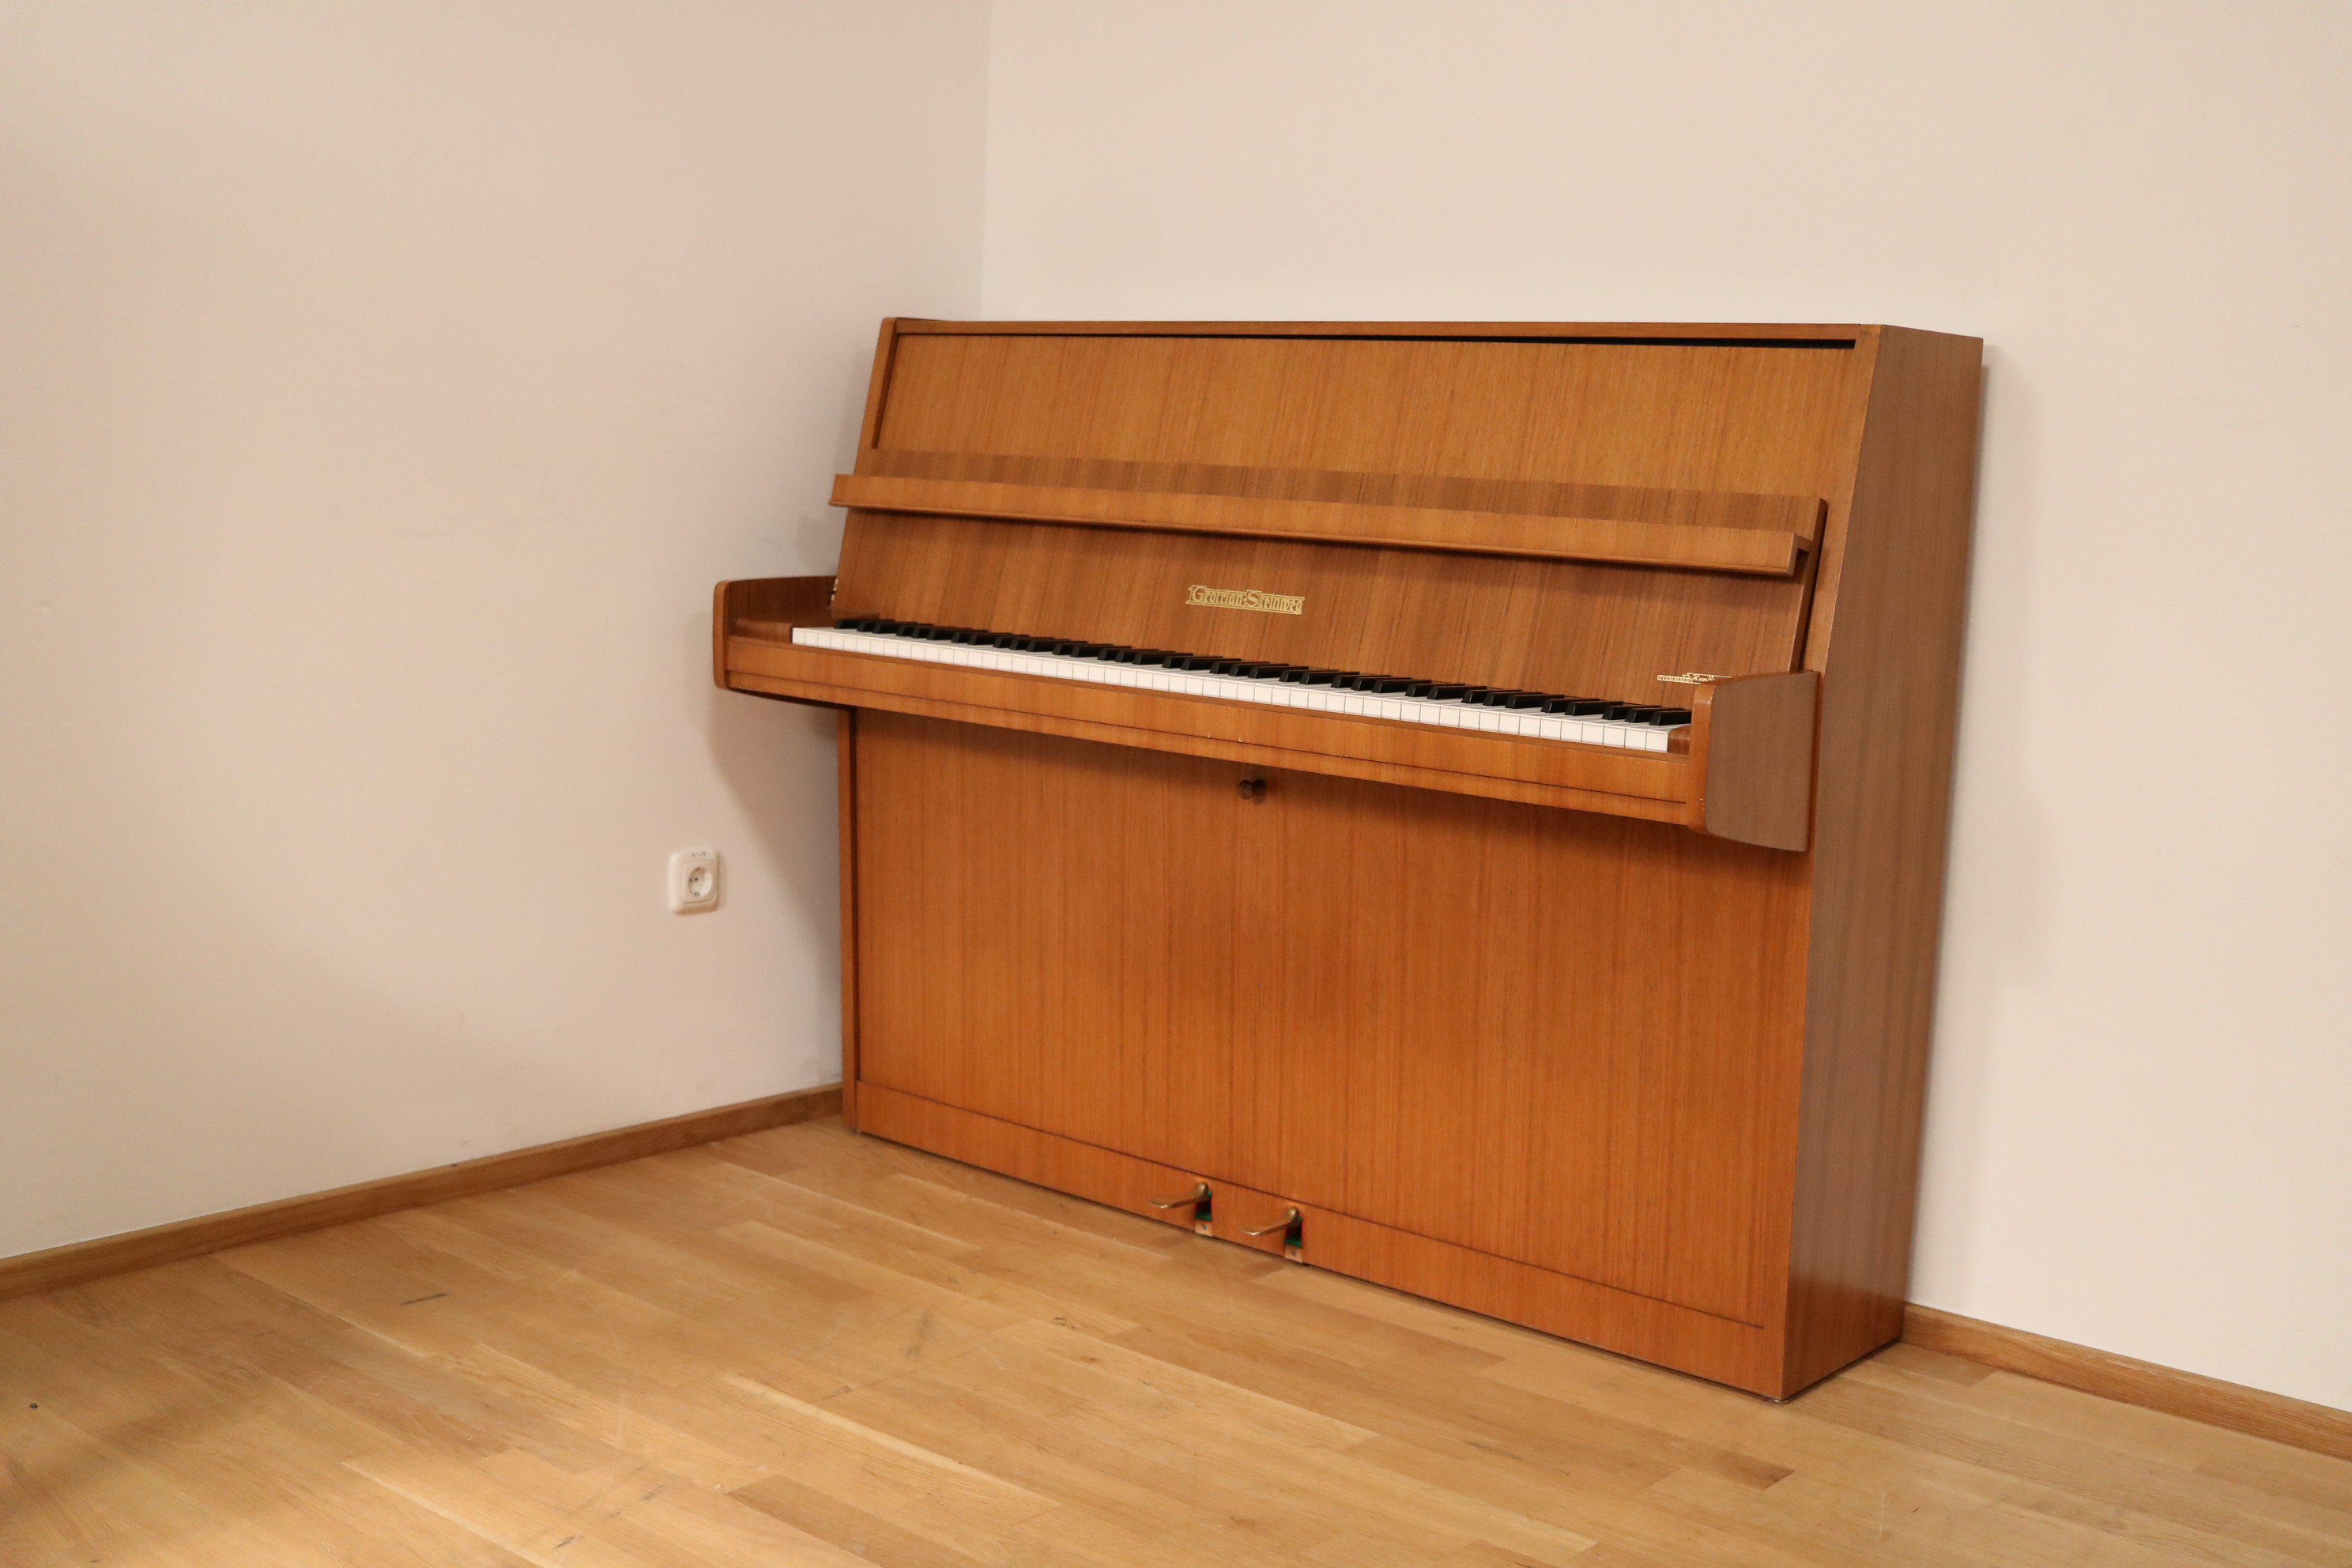 Grotrian Steinweg Klavier